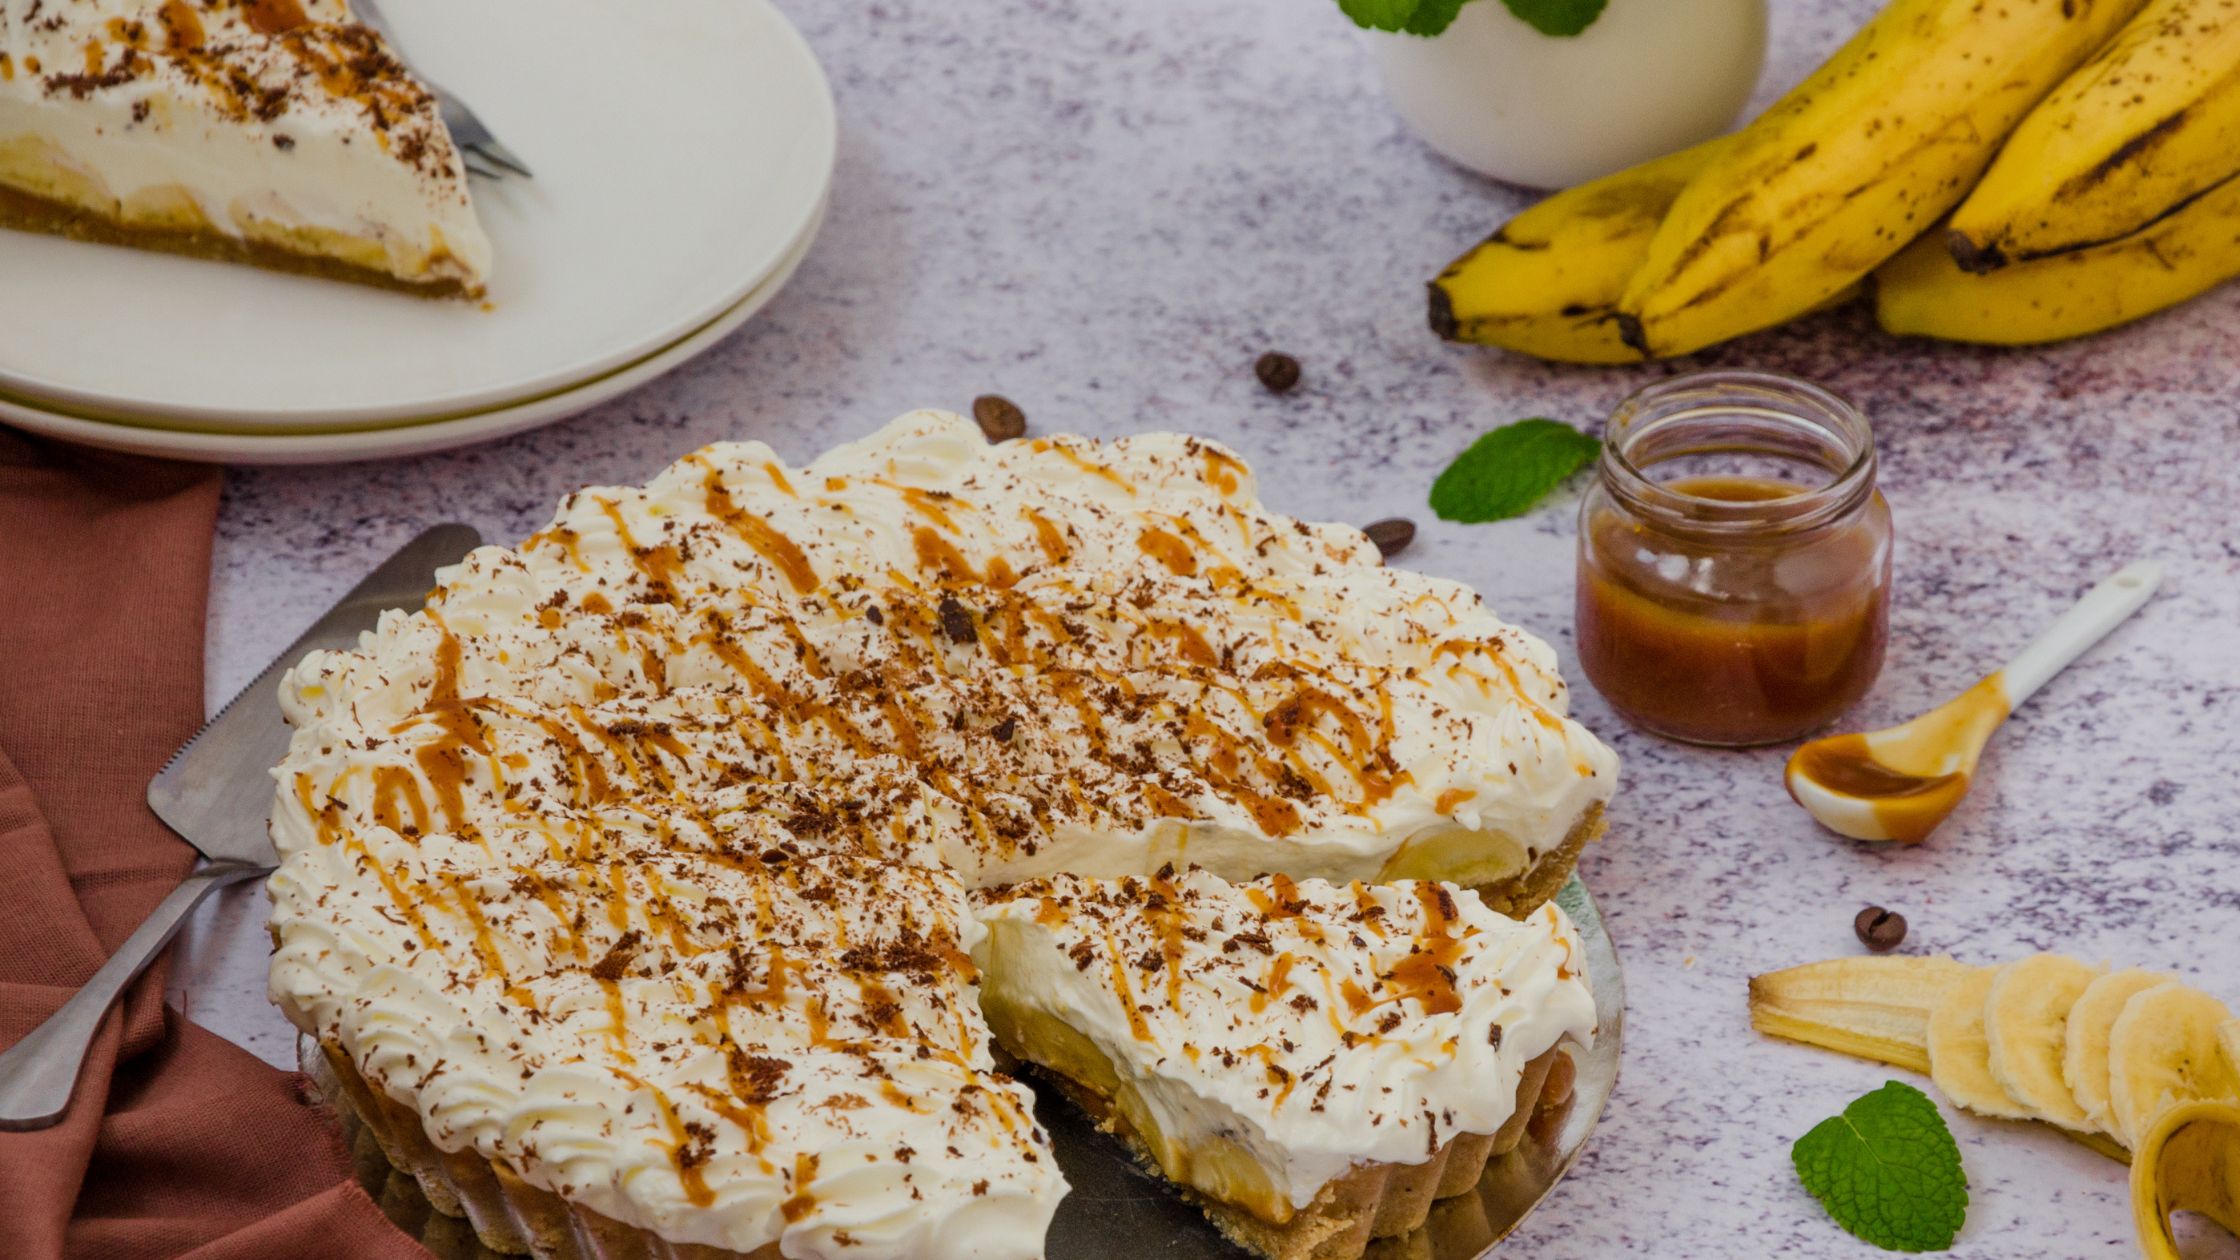 Torta de Banana com Creme e Farofa: Receita Fácil e Rápida.